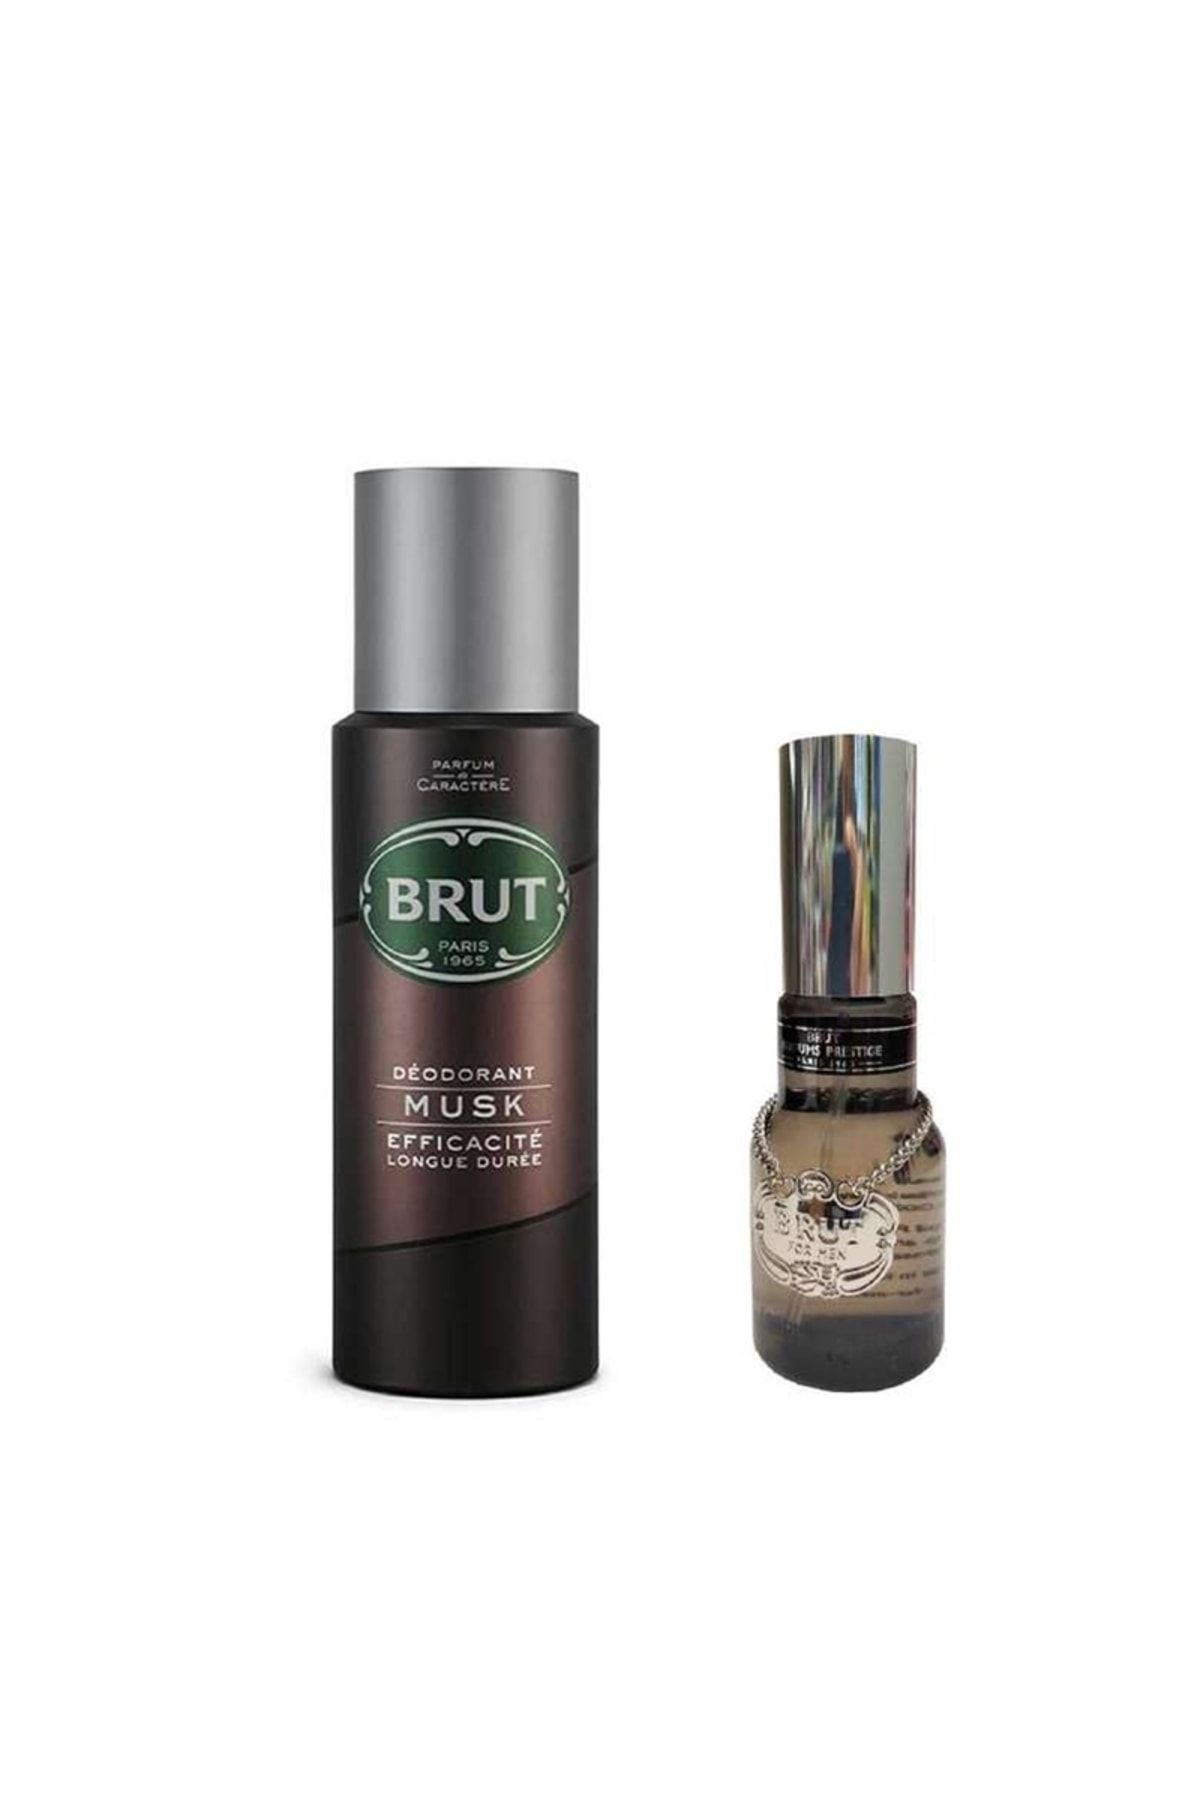 Brut Madalyon EDT Erkek Parfüm Set Musk 30 ml + Deodarant 200 ml